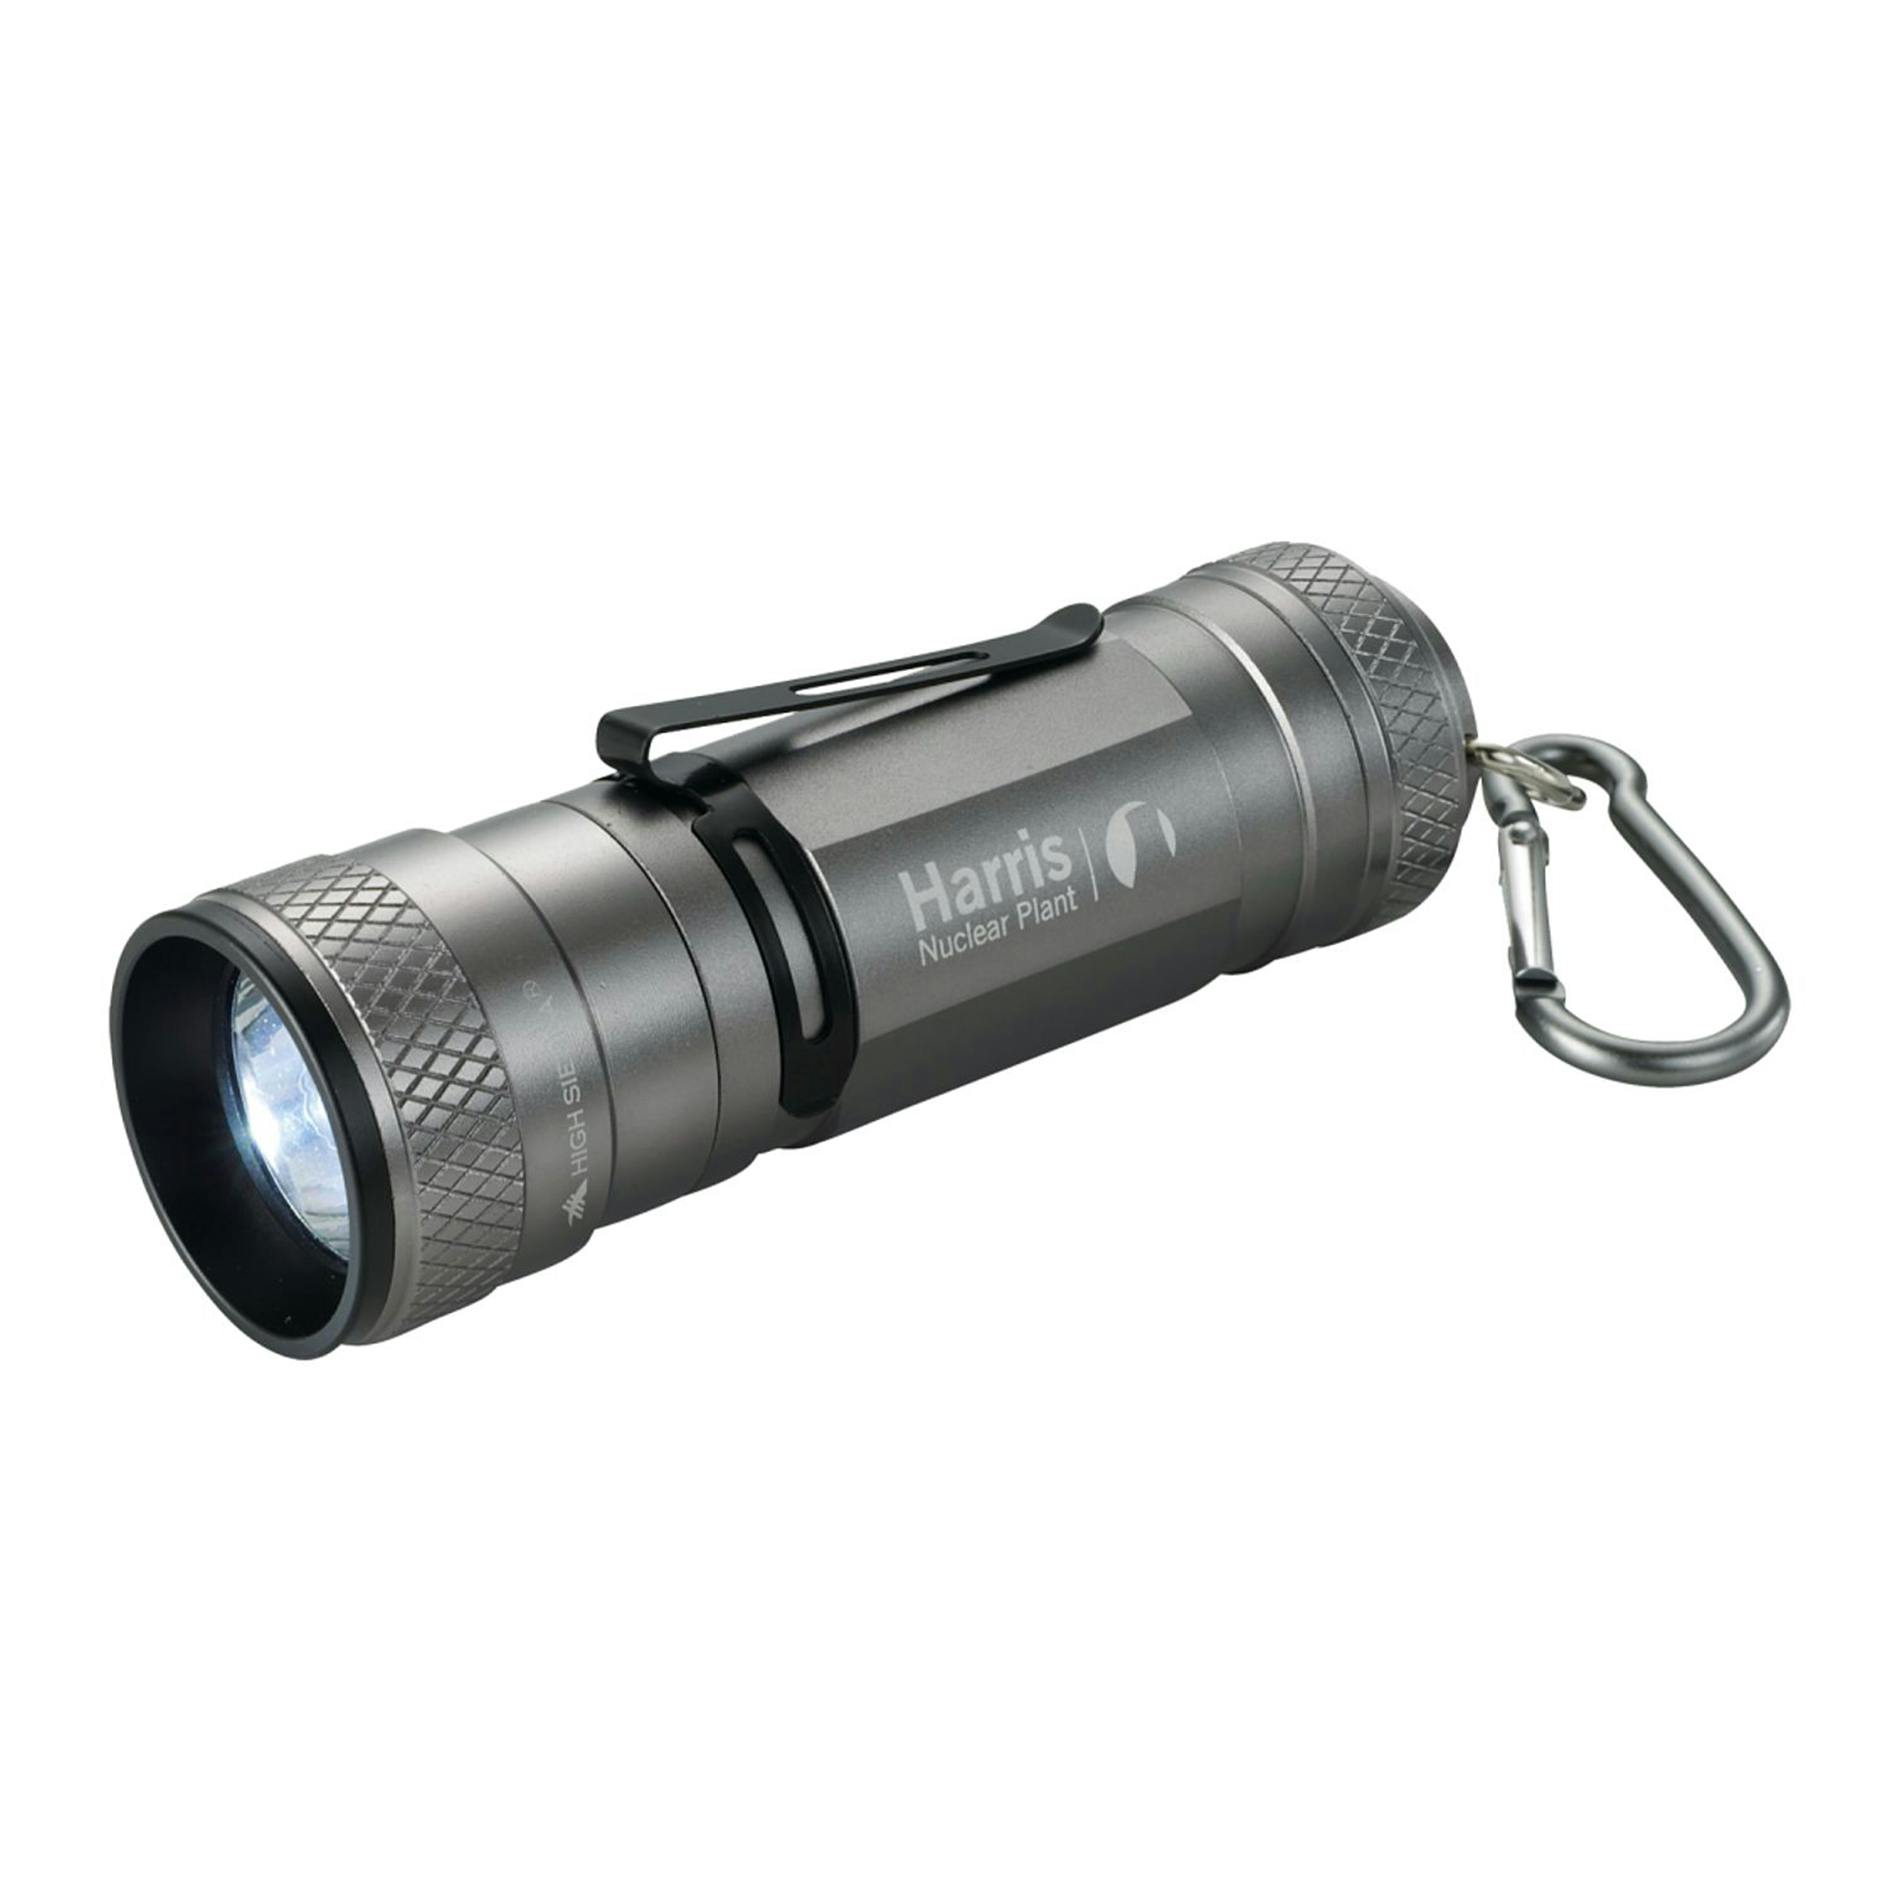 High Sierra® Bright CREE Zoom Flashlight - additional Image 1